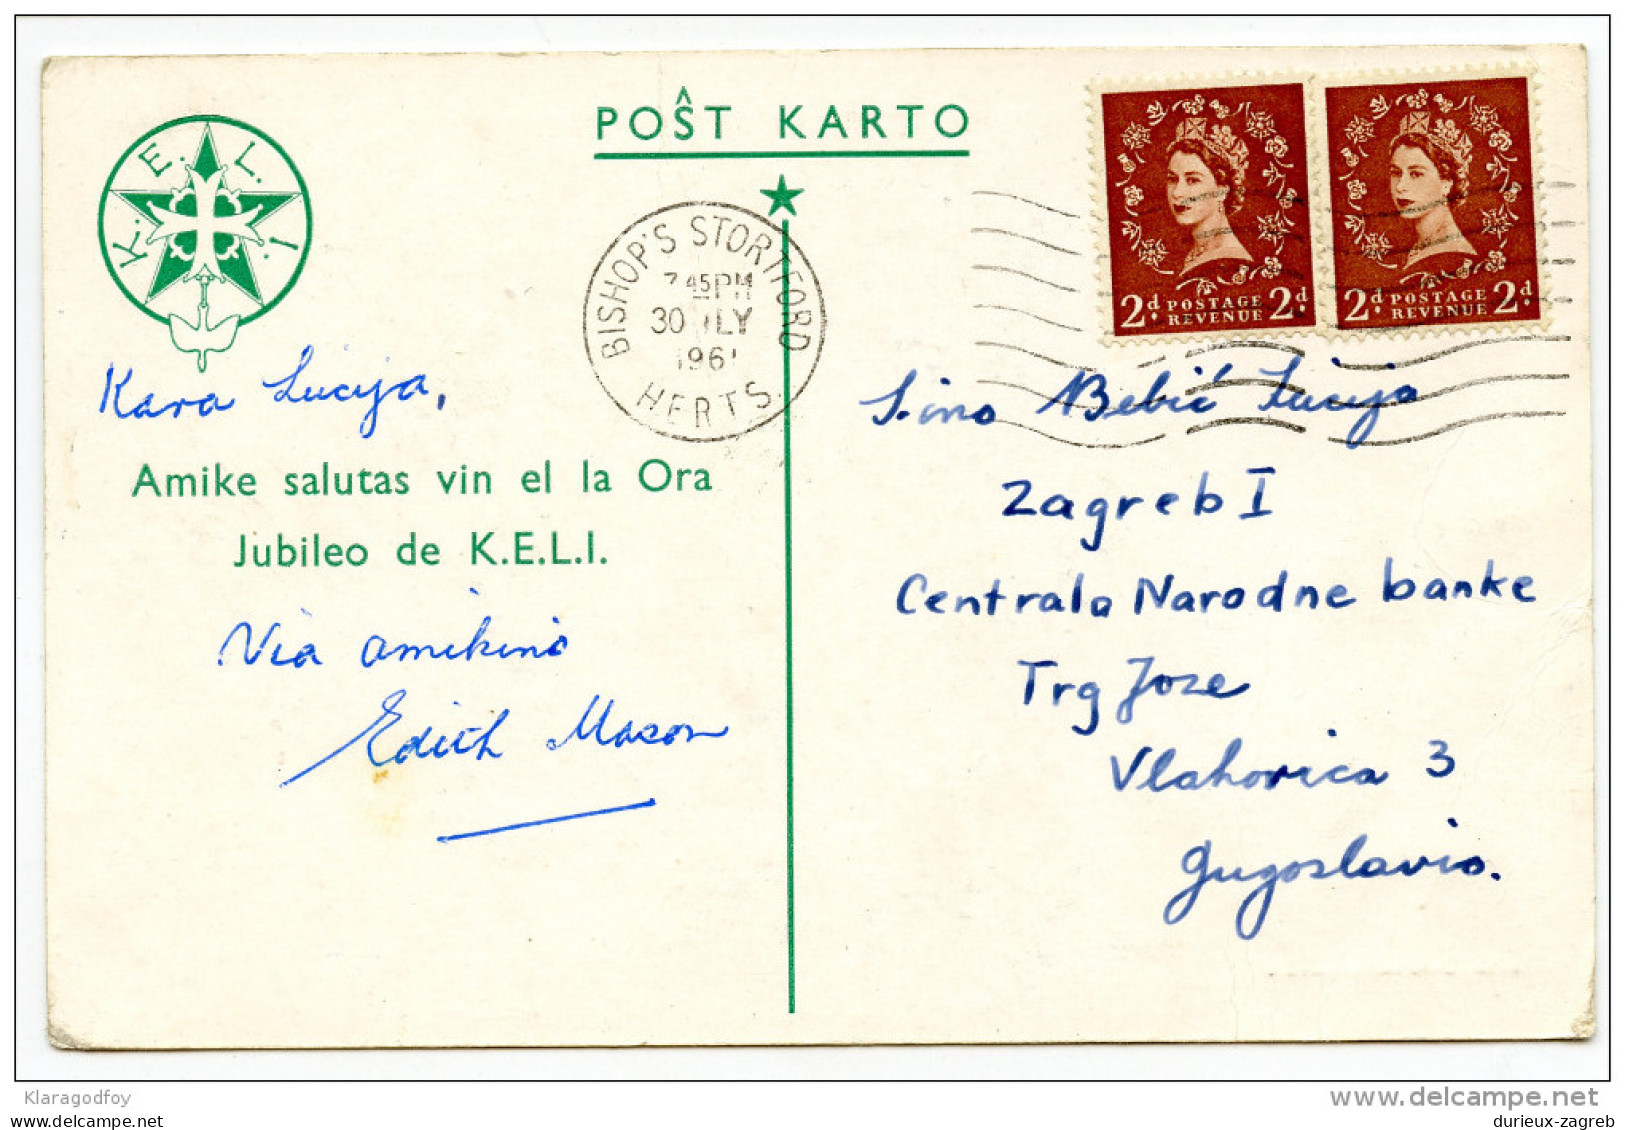 Hockerill Training College The Close Hotel Esperanto Postcard Travelled 1961 To Yugoslavia Bb151102 - Esperanto